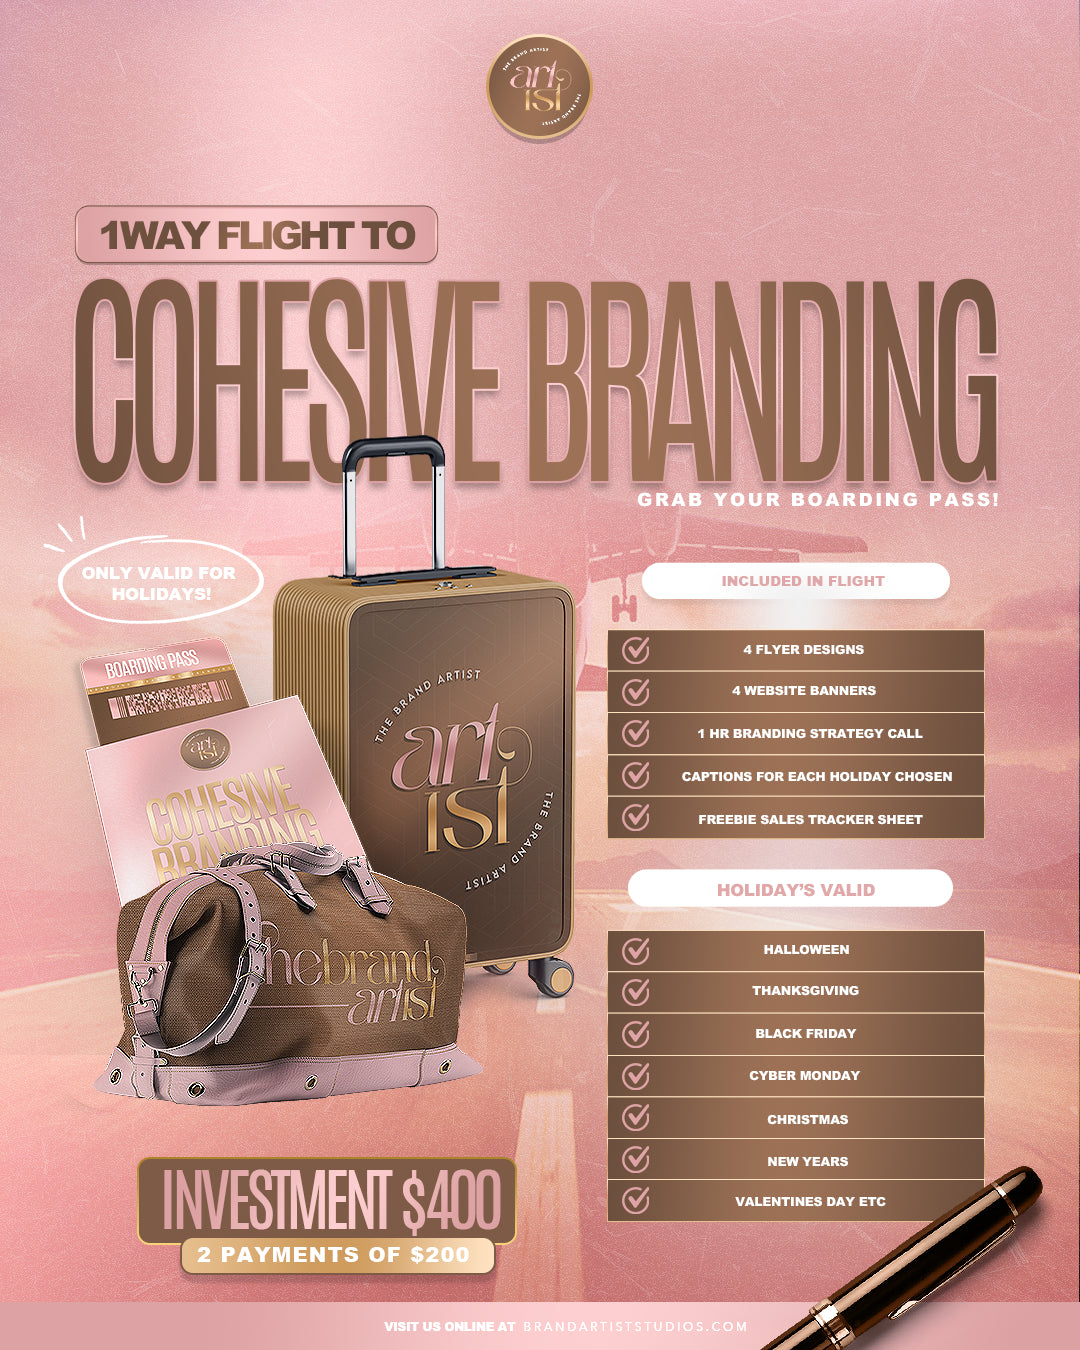 1 Way Flight To Cohesive Branding